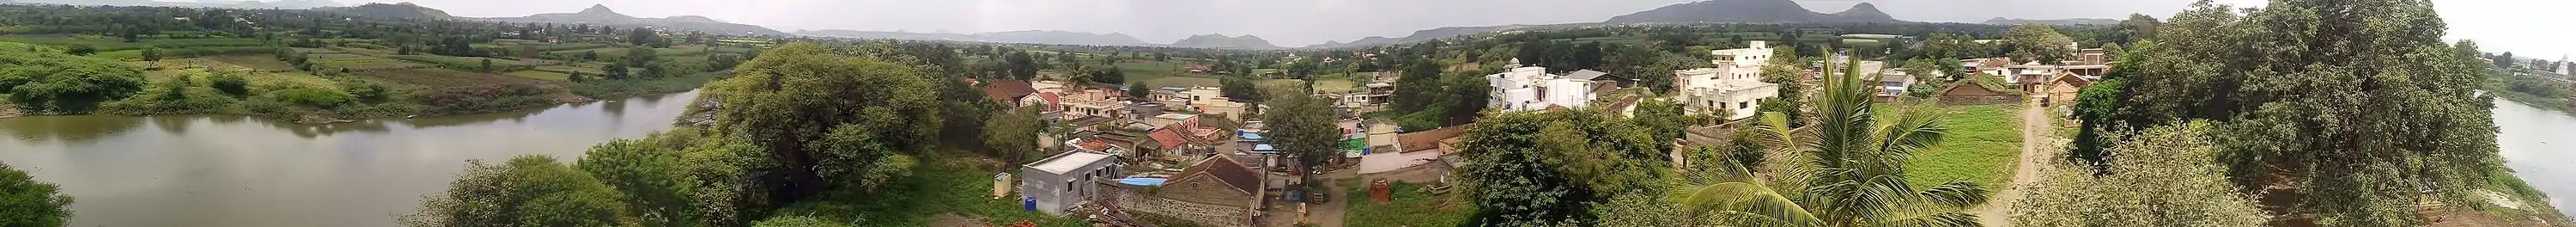 Panorama of village